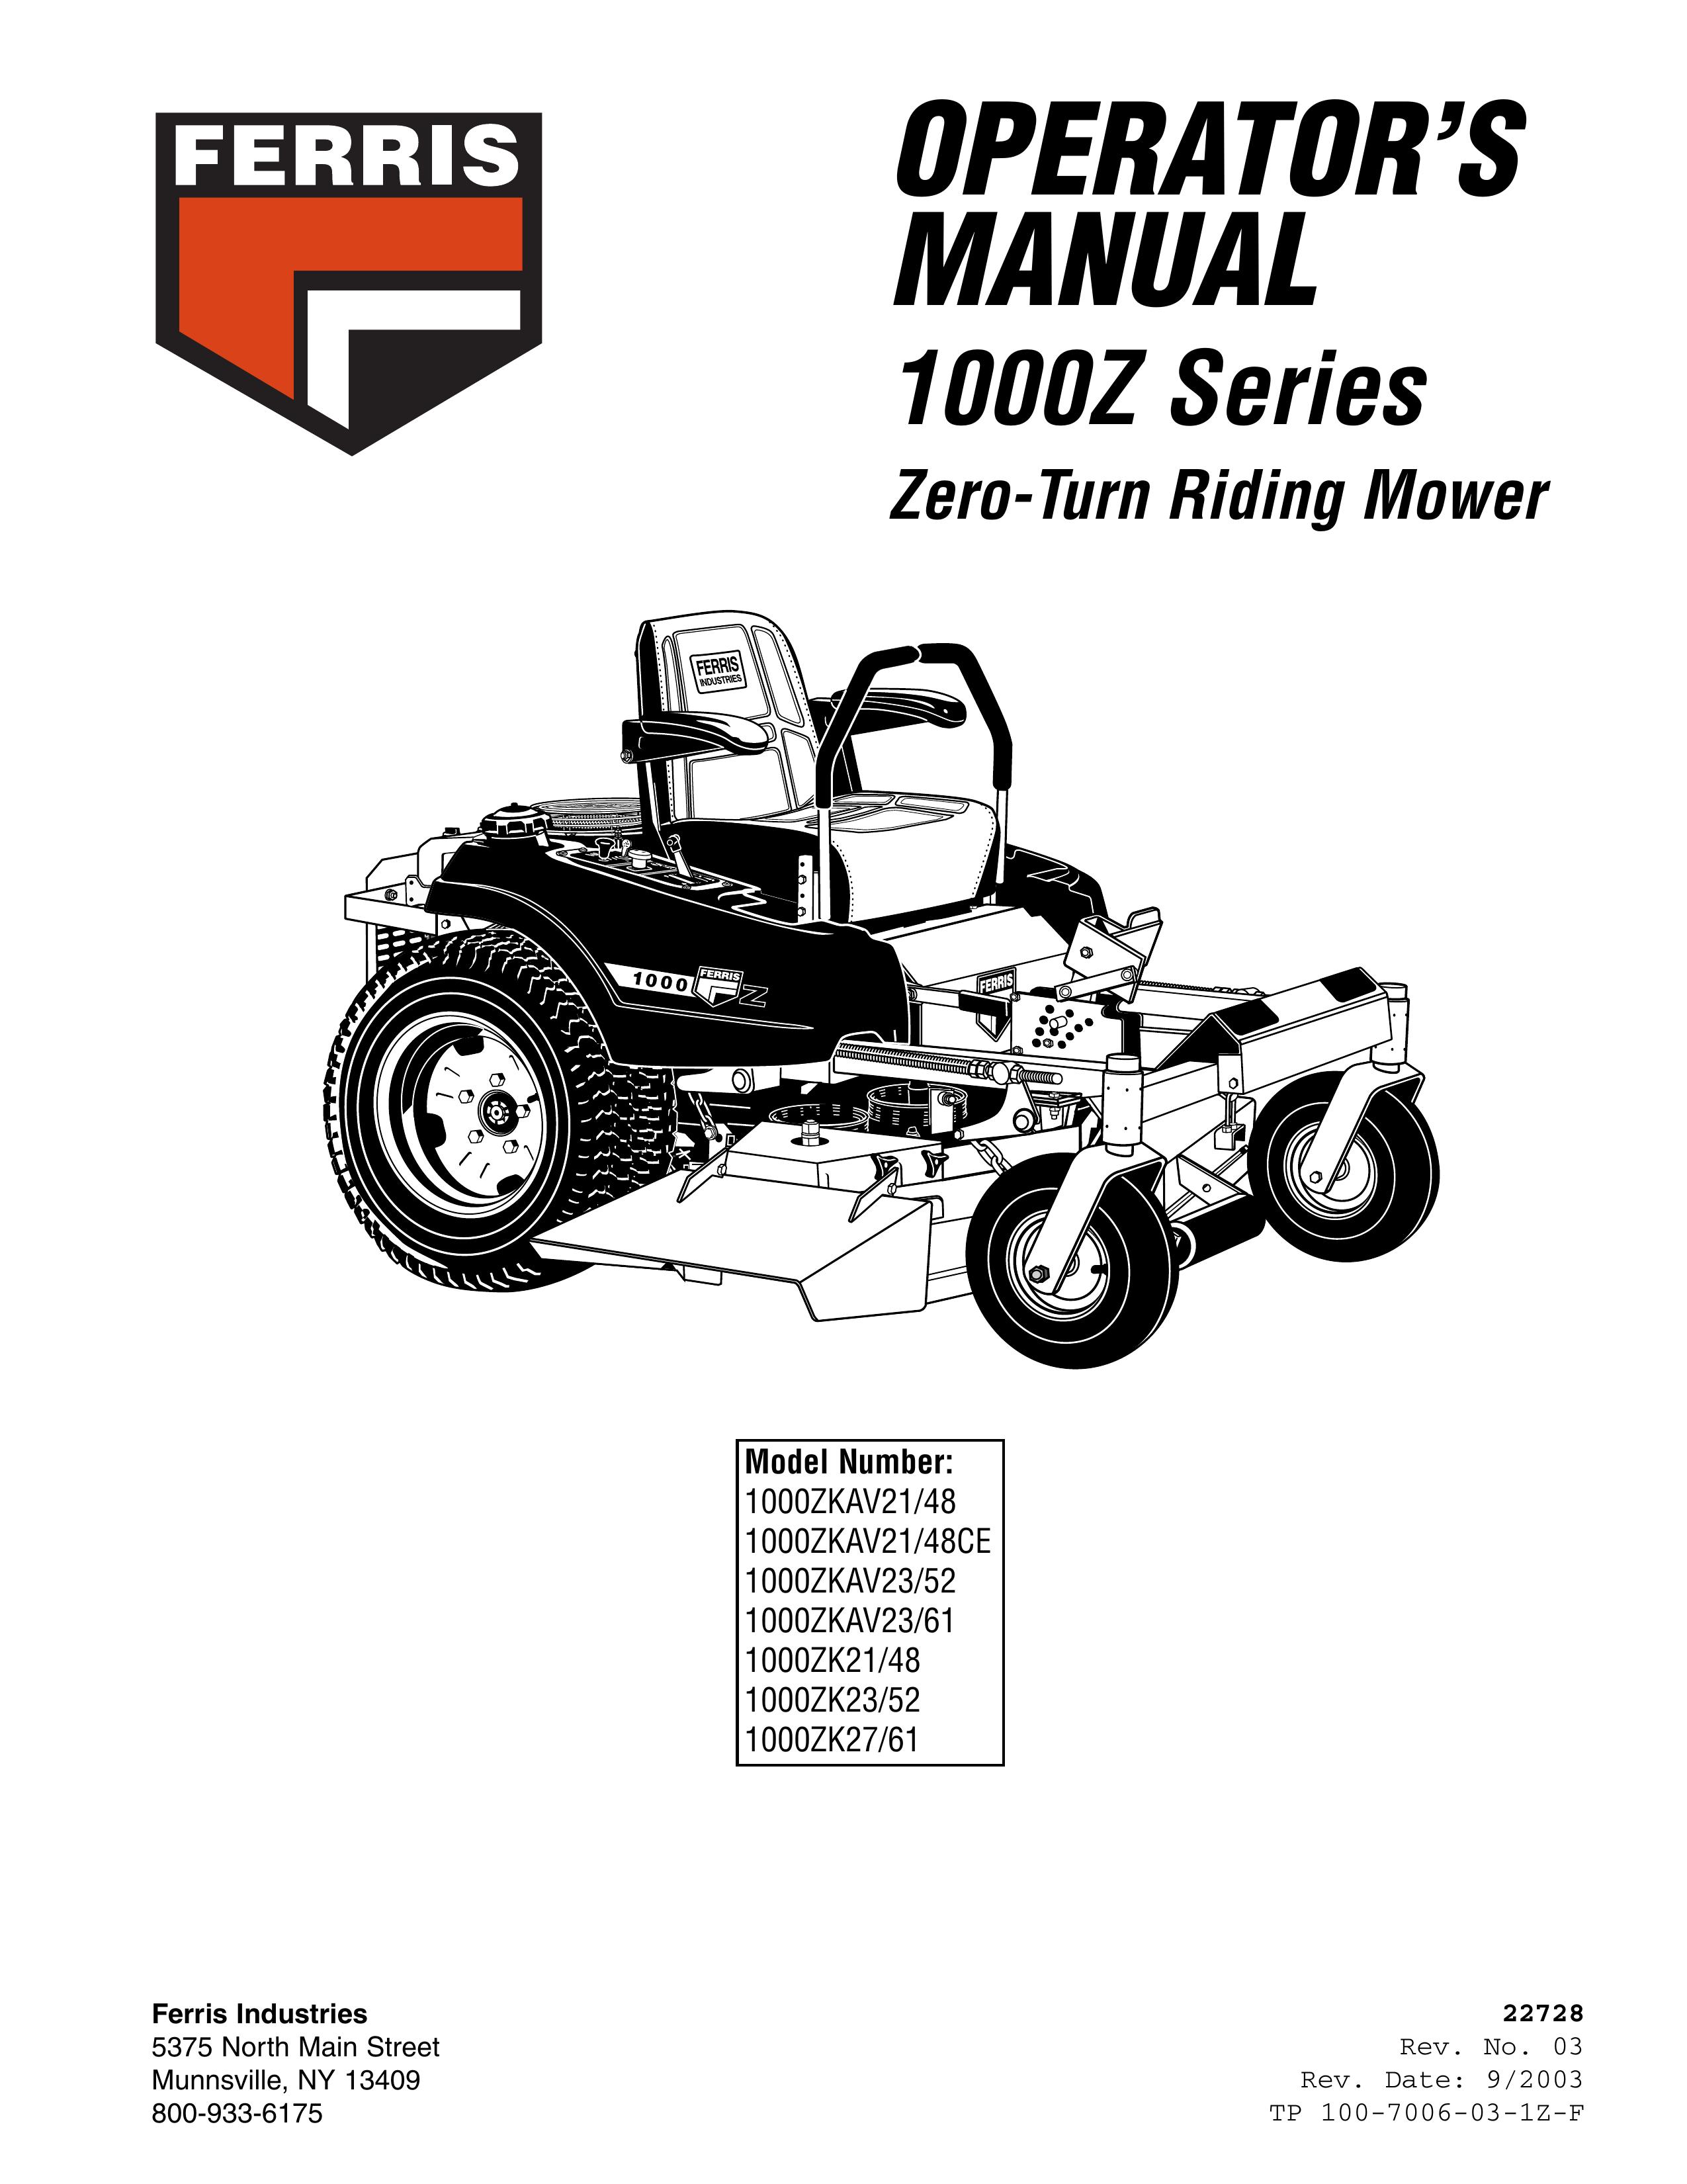 Ferris Industries 1000ZKAV23/61 Lawn Mower User Manual